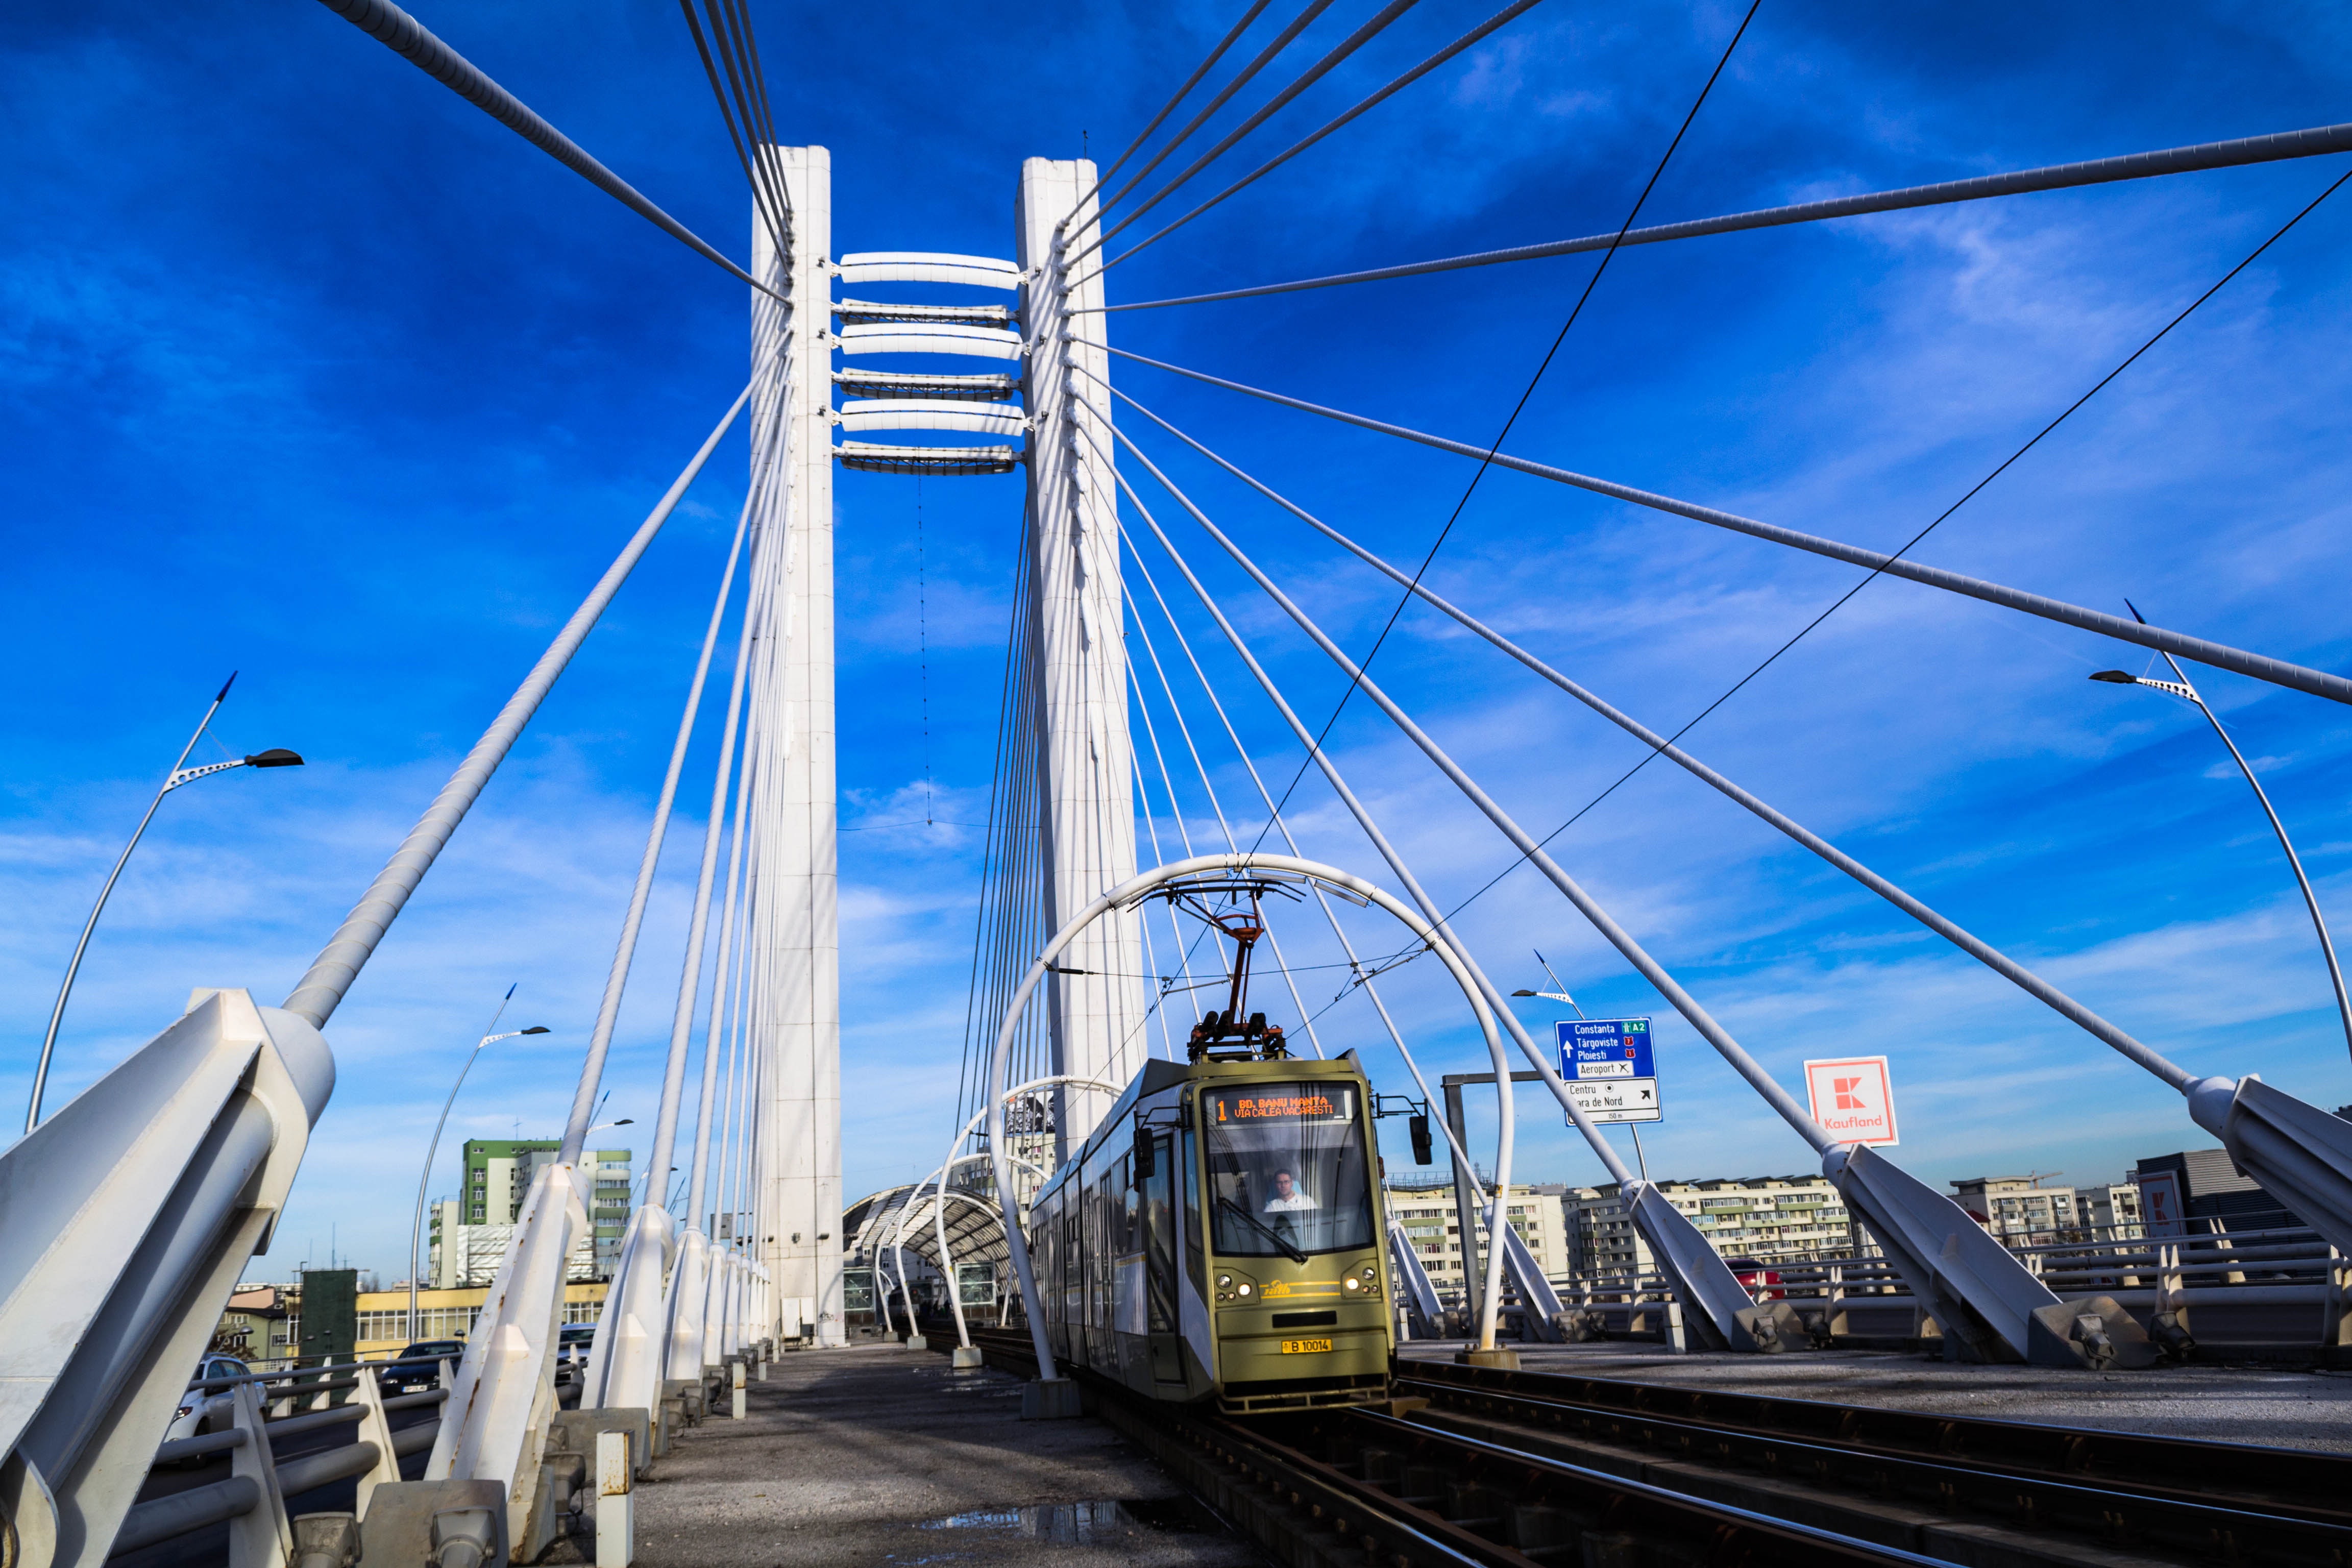 Bridge with train under blue sky photo